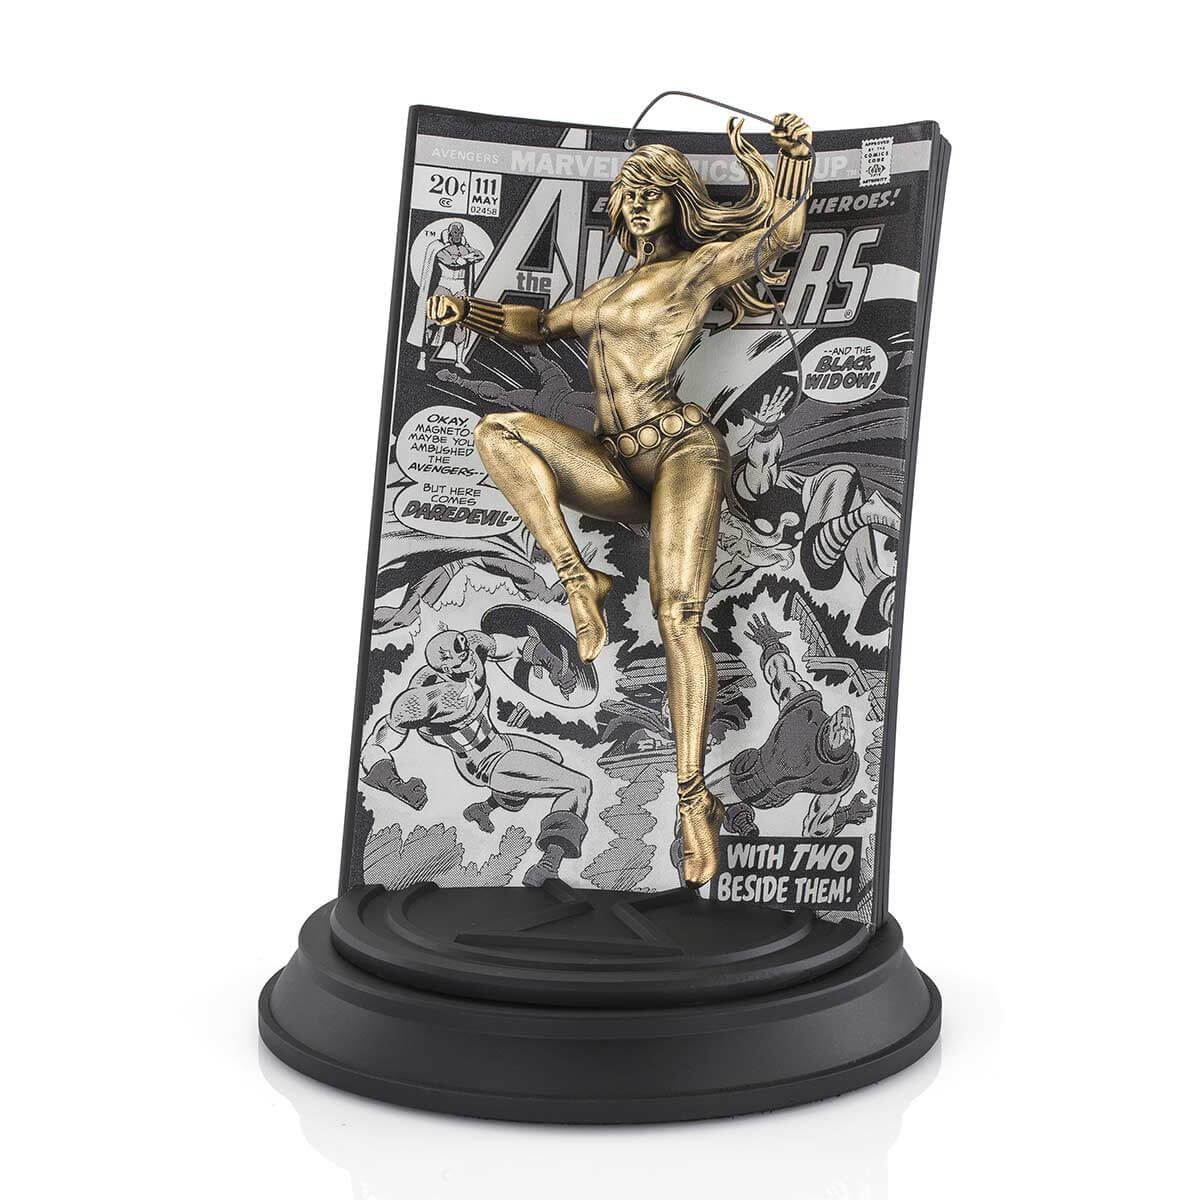 Gold Black Widow Avengers Volume 1 #111 Limited Edition Figurine - Marvel Statue